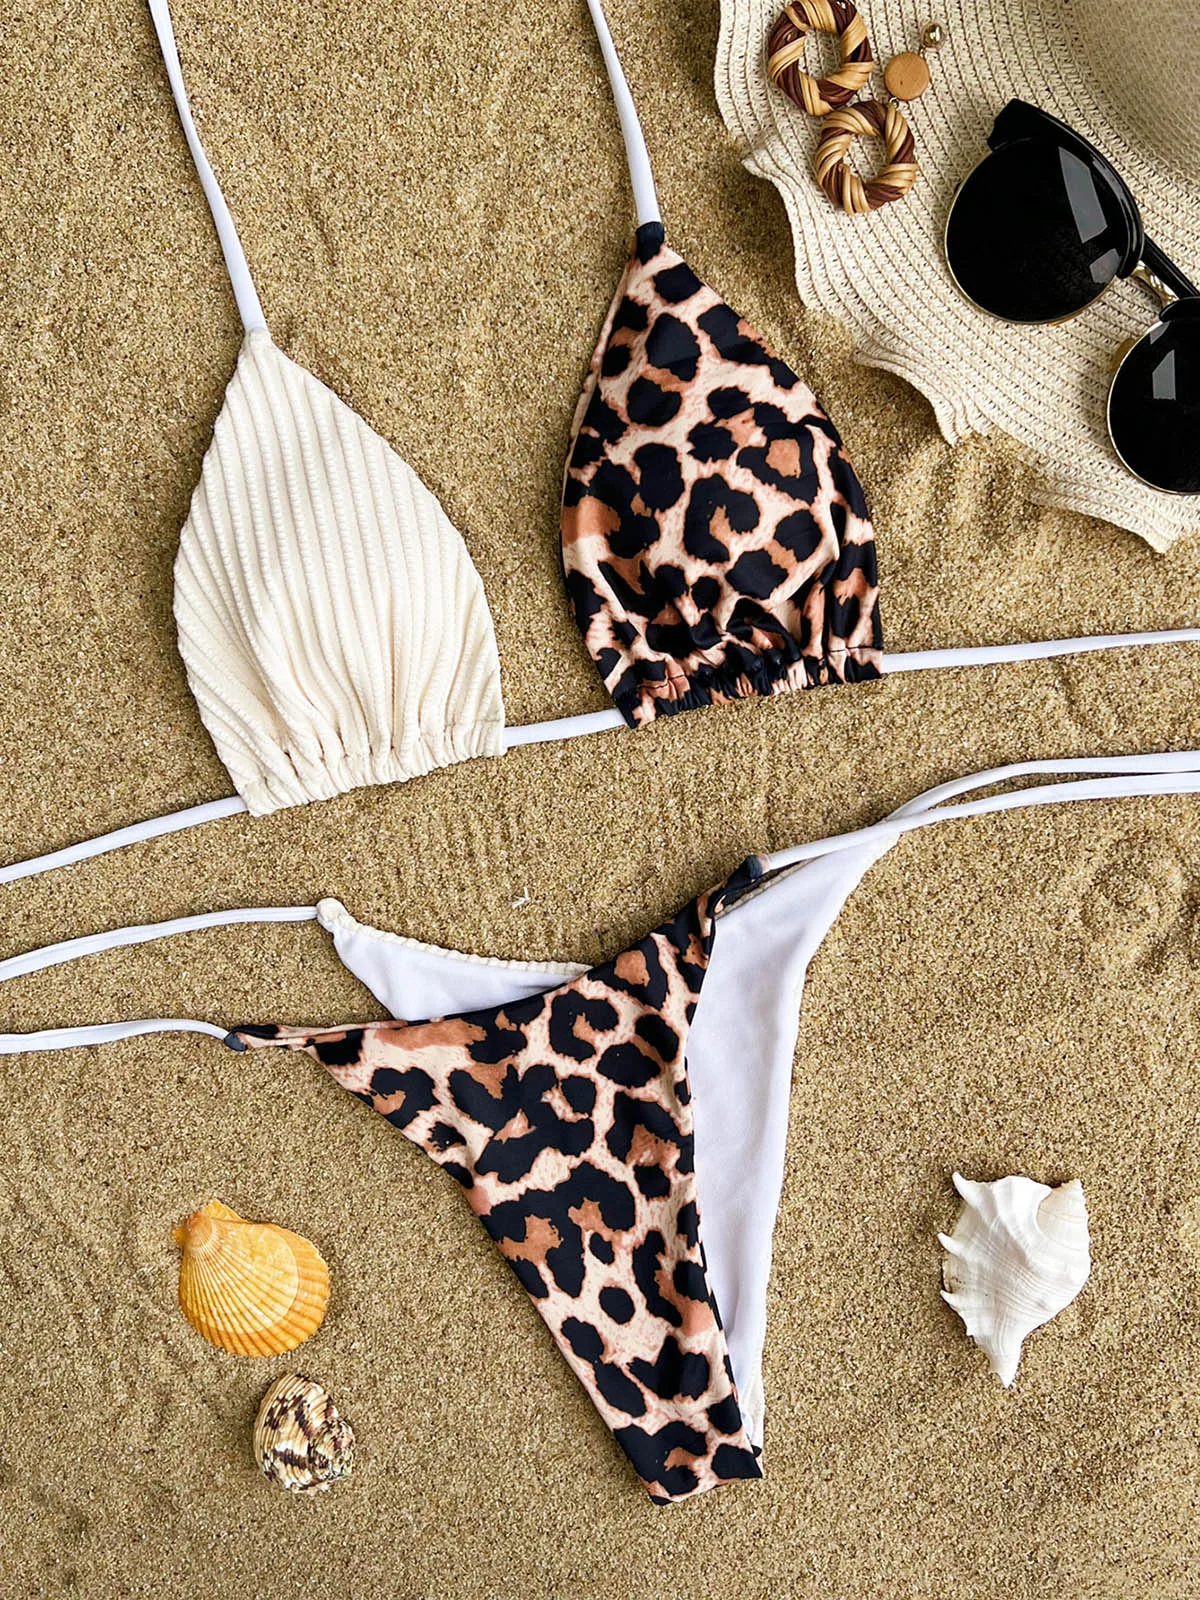 Thong Micro Bikini 2023 Szexi női fürdőruha fürdőruha Női patchwork Bikini szett fürdőruha Fürdőruha Fürdőruhák Strandruházat - 5